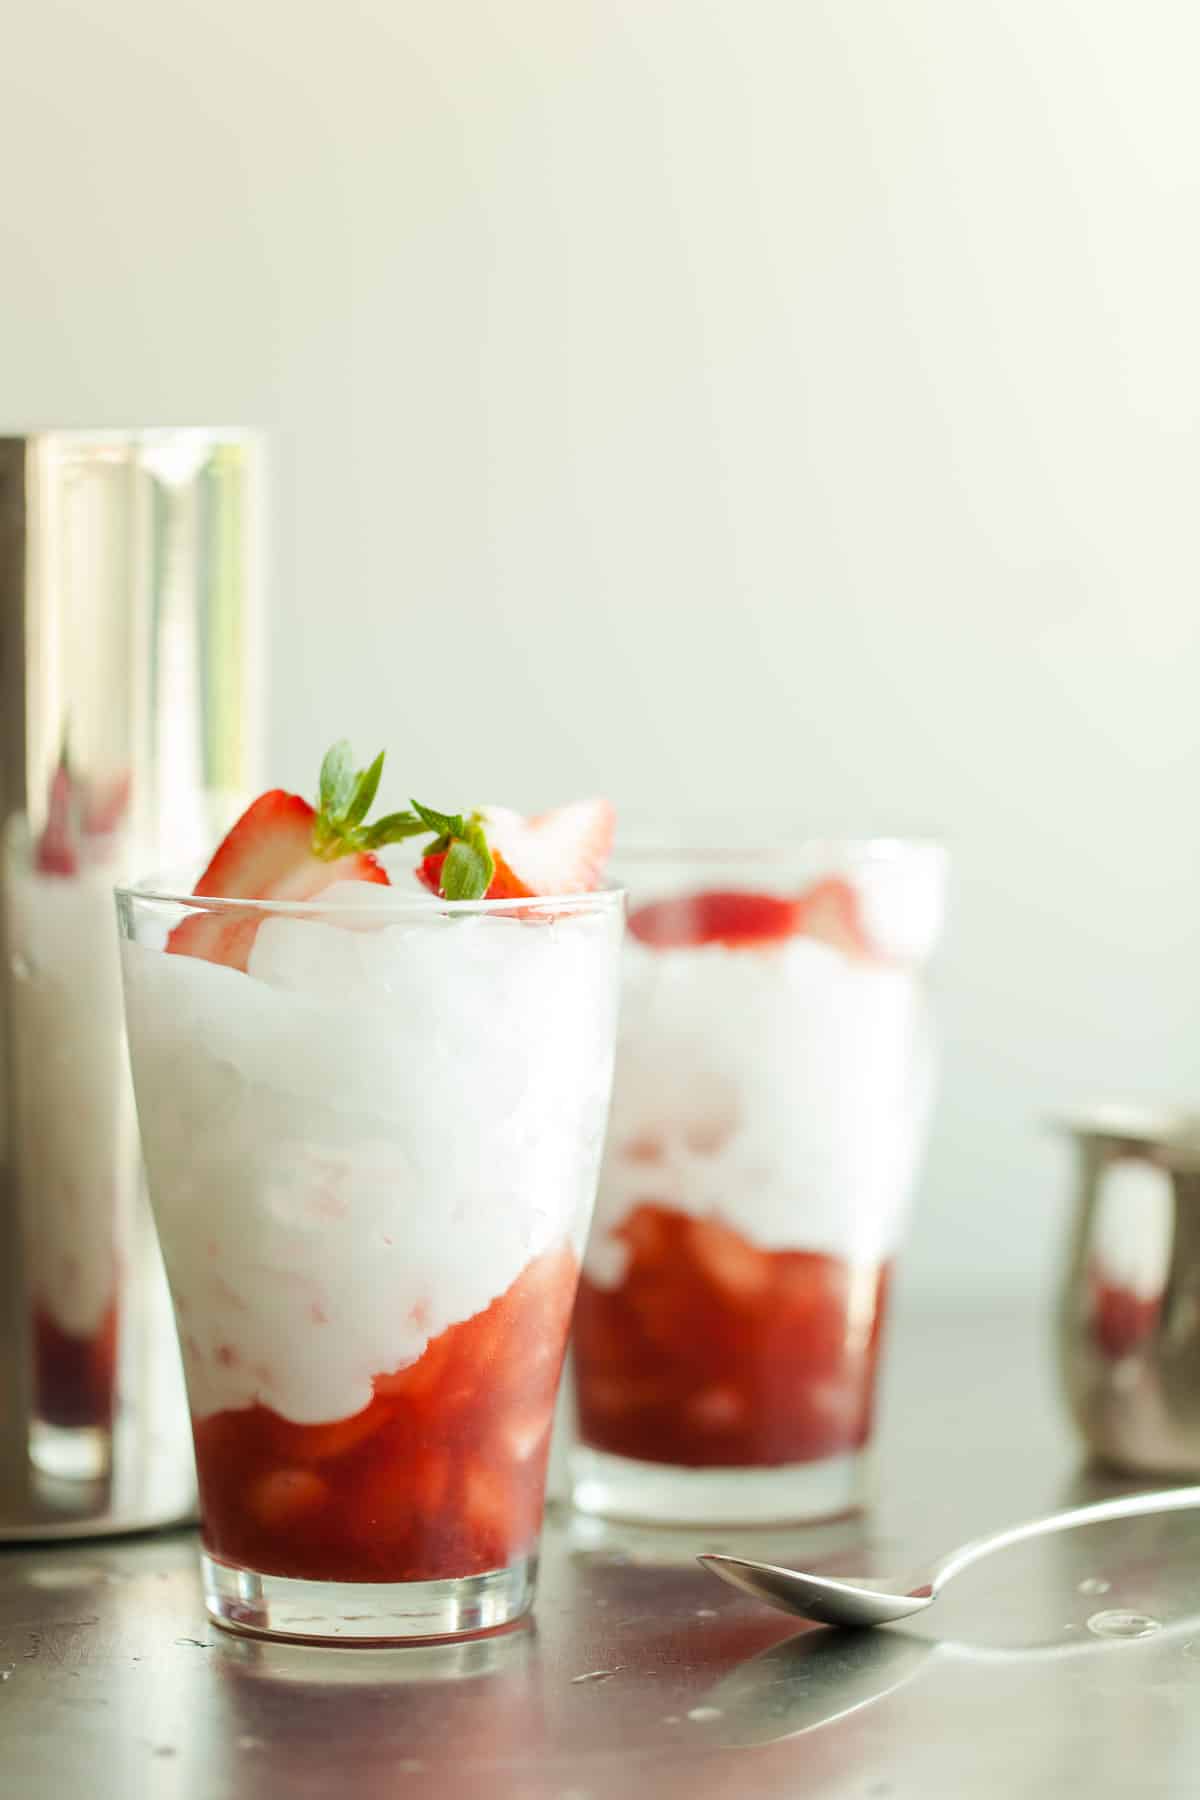 Strawberry Italian Cream Sodas Topped with Strawberries